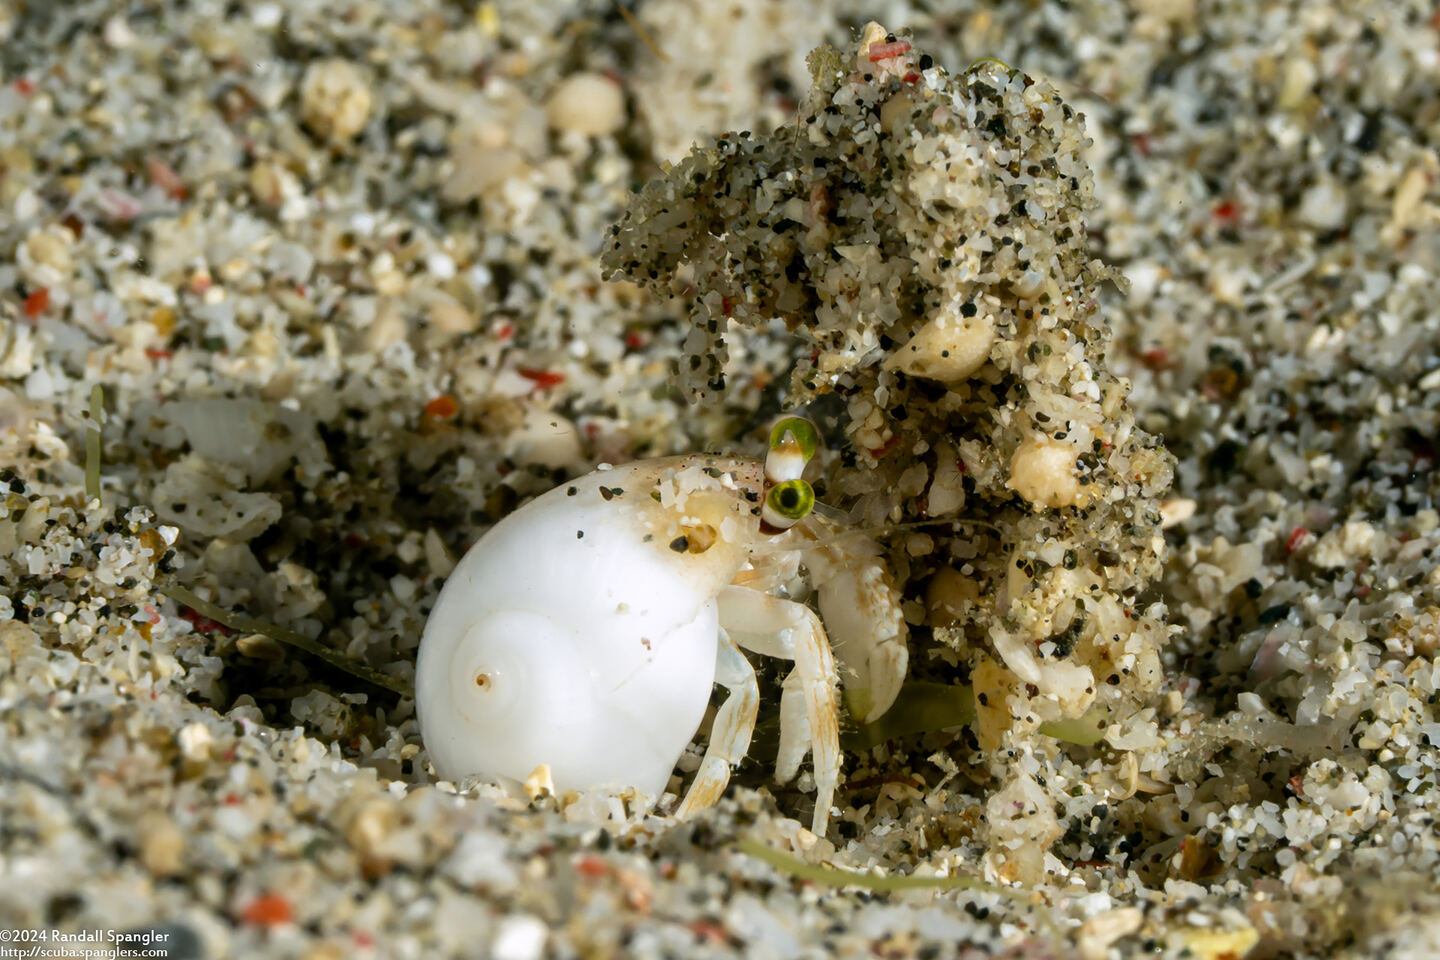 Dardanus deformis (Pale Anemone Hermit Crab)